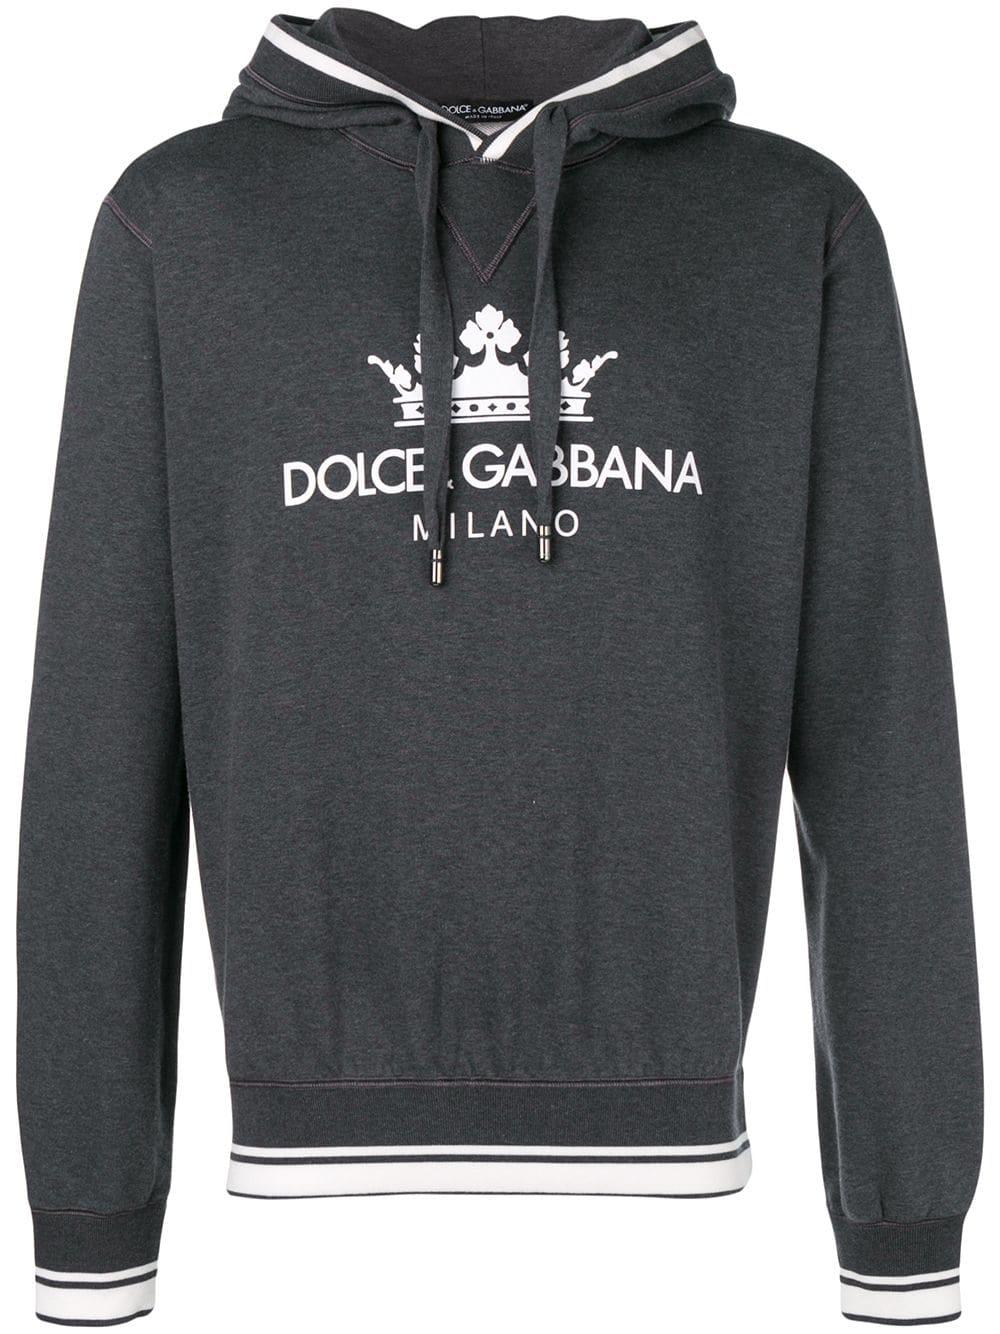 dolce and gabbana milano hoodie